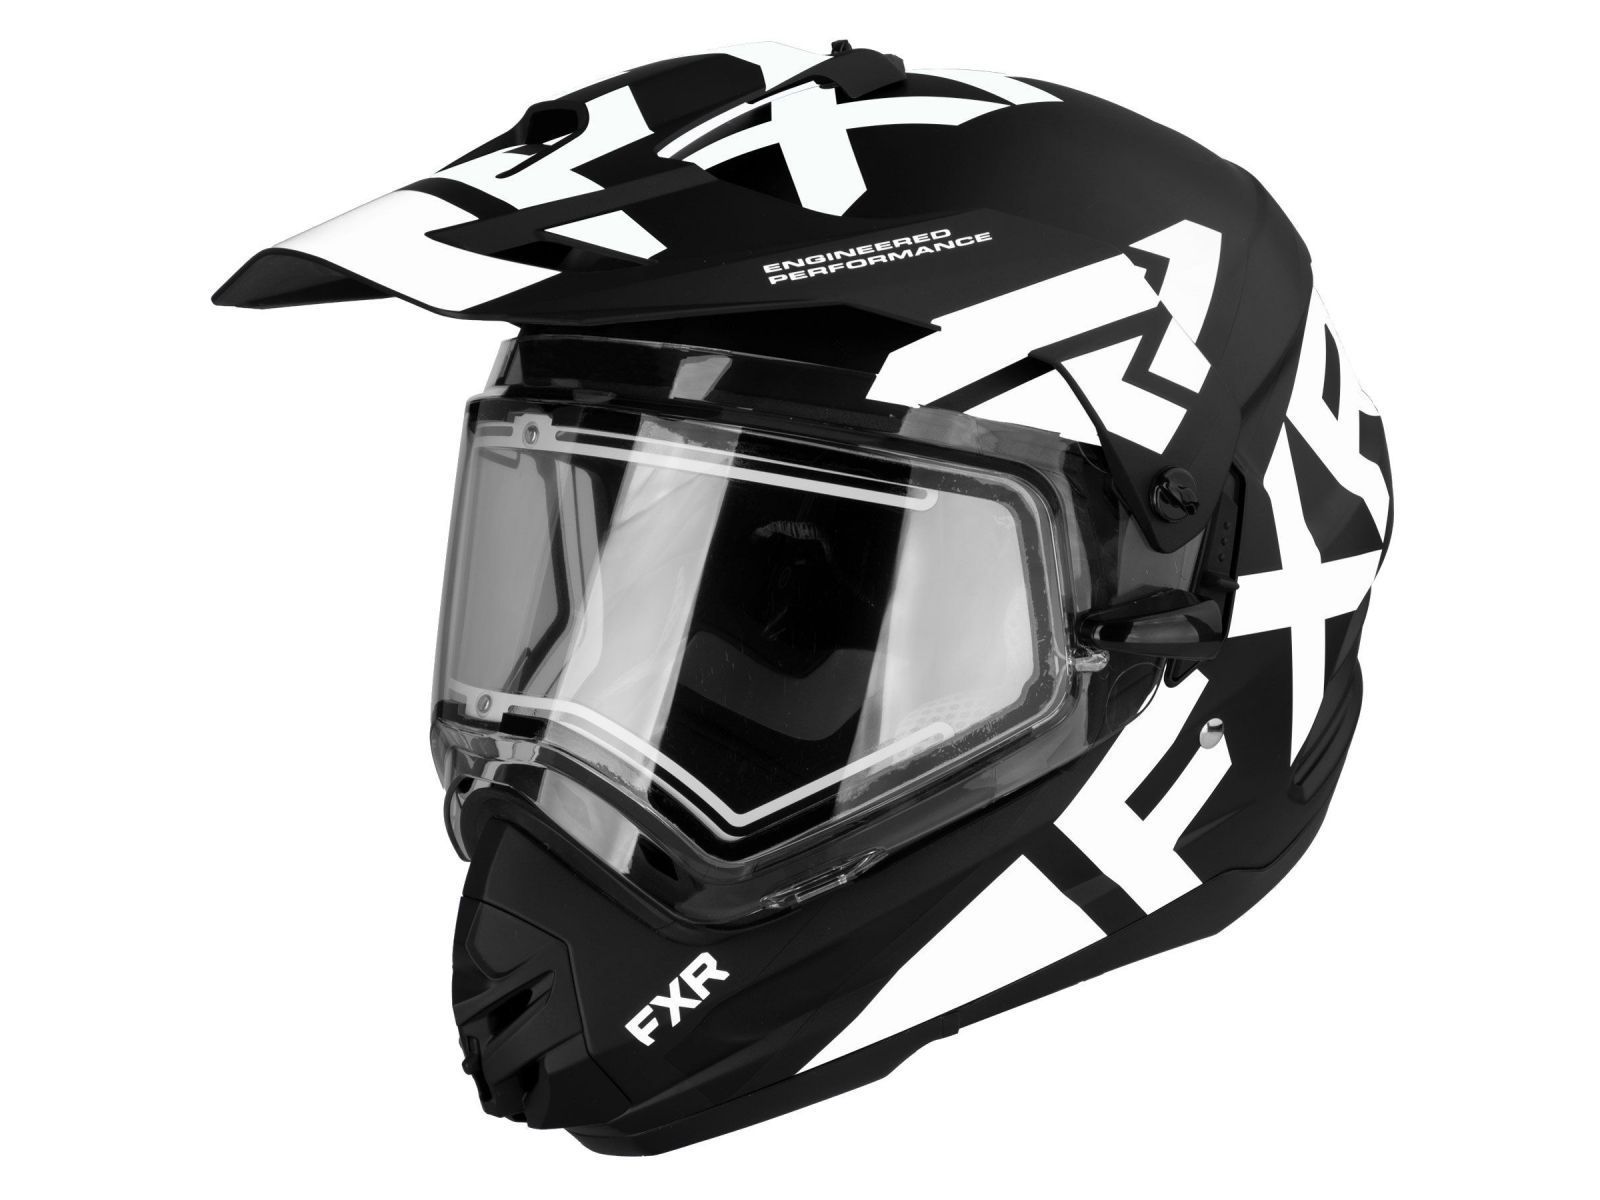 Шлем для снегохода FXR TORQUE X TEAM 22 (визор с подогревом) Black/White